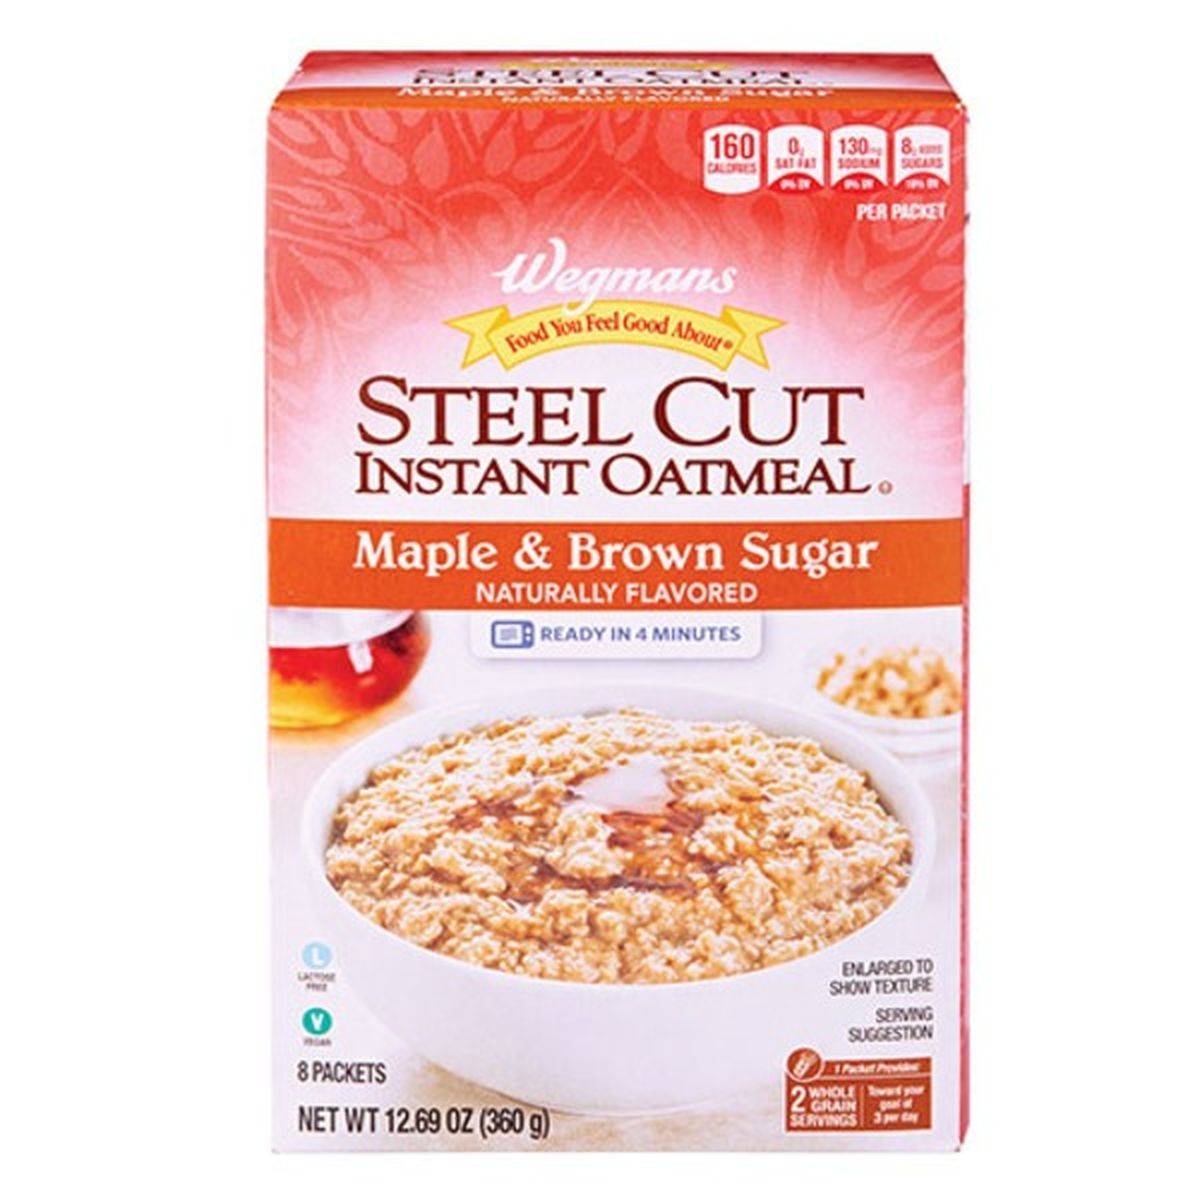 Calories in Wegmans Maple & Brown Sugar Steel Cut Instant Oatmeal, 8 Packets